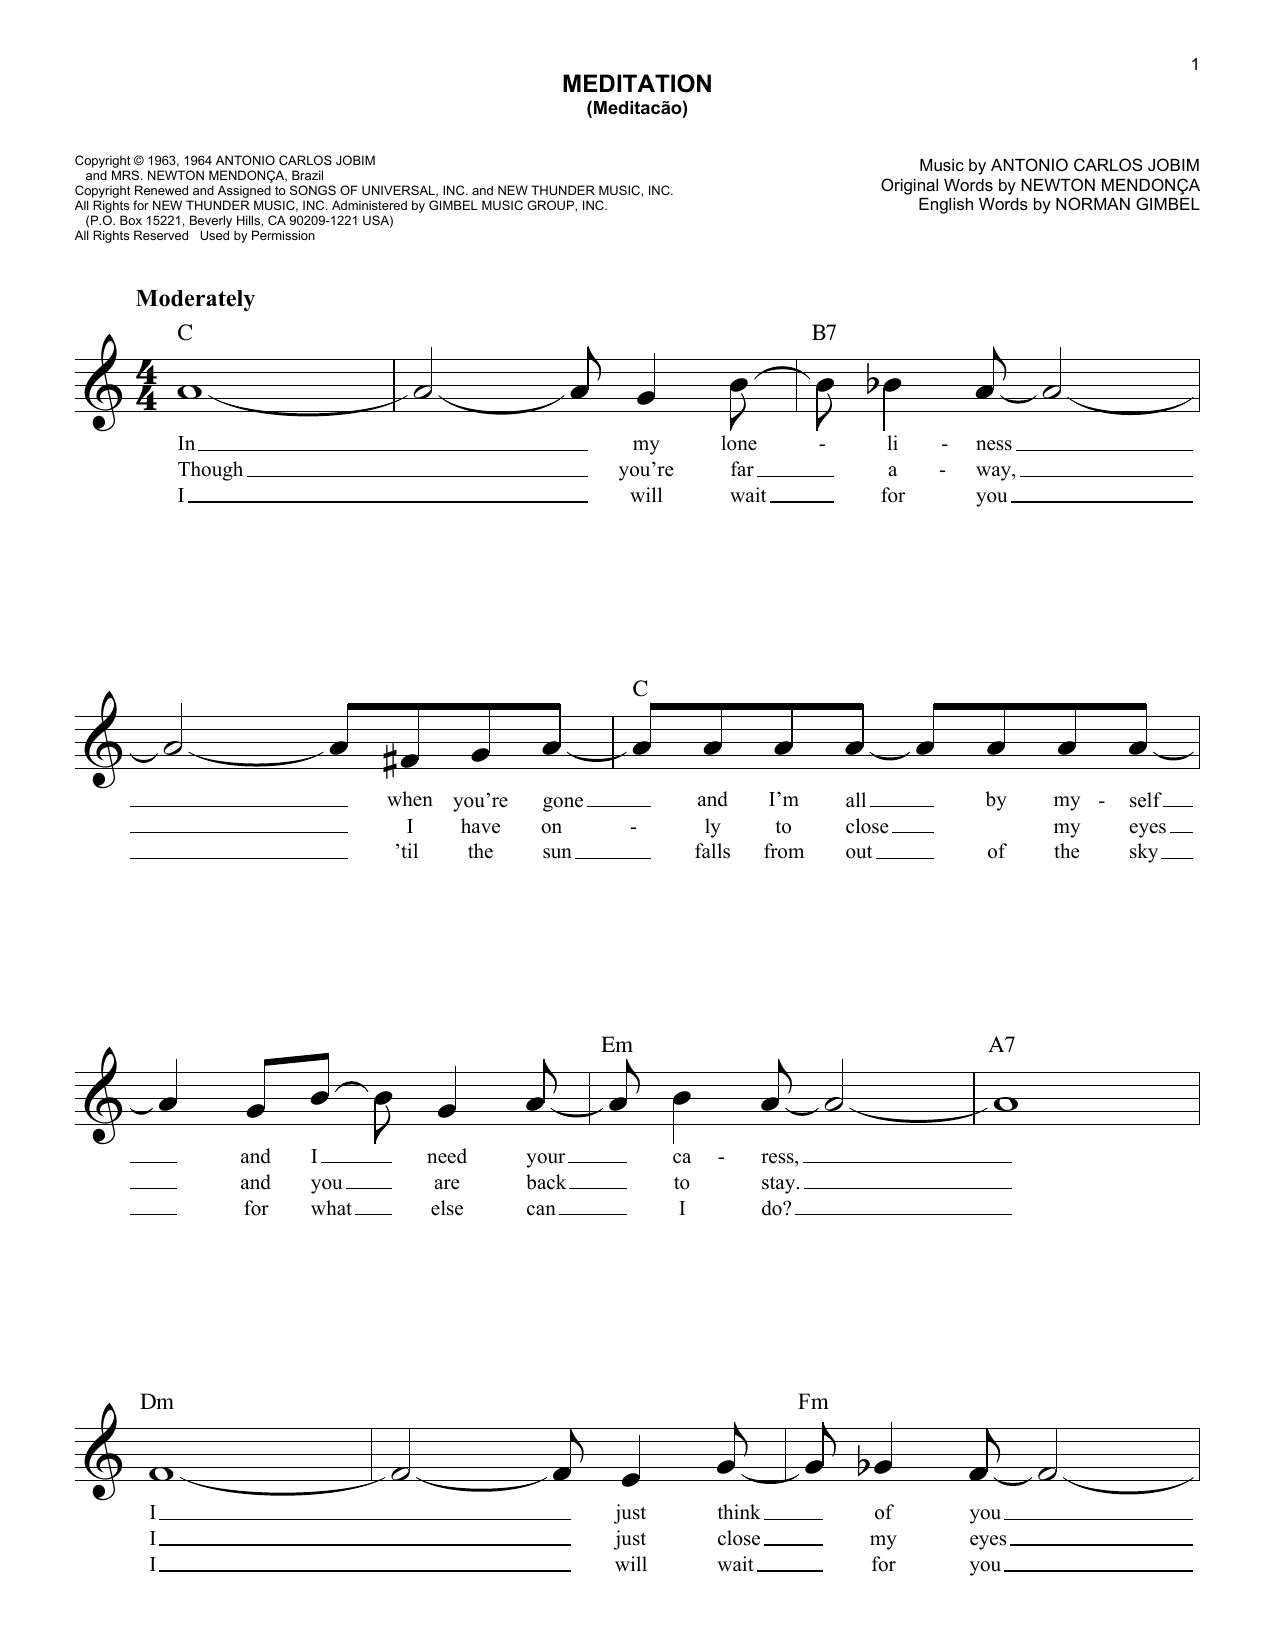 Antonio Carlos Jobim Meditation (Meditacao) sheet music notes and chords. Download Printable PDF.